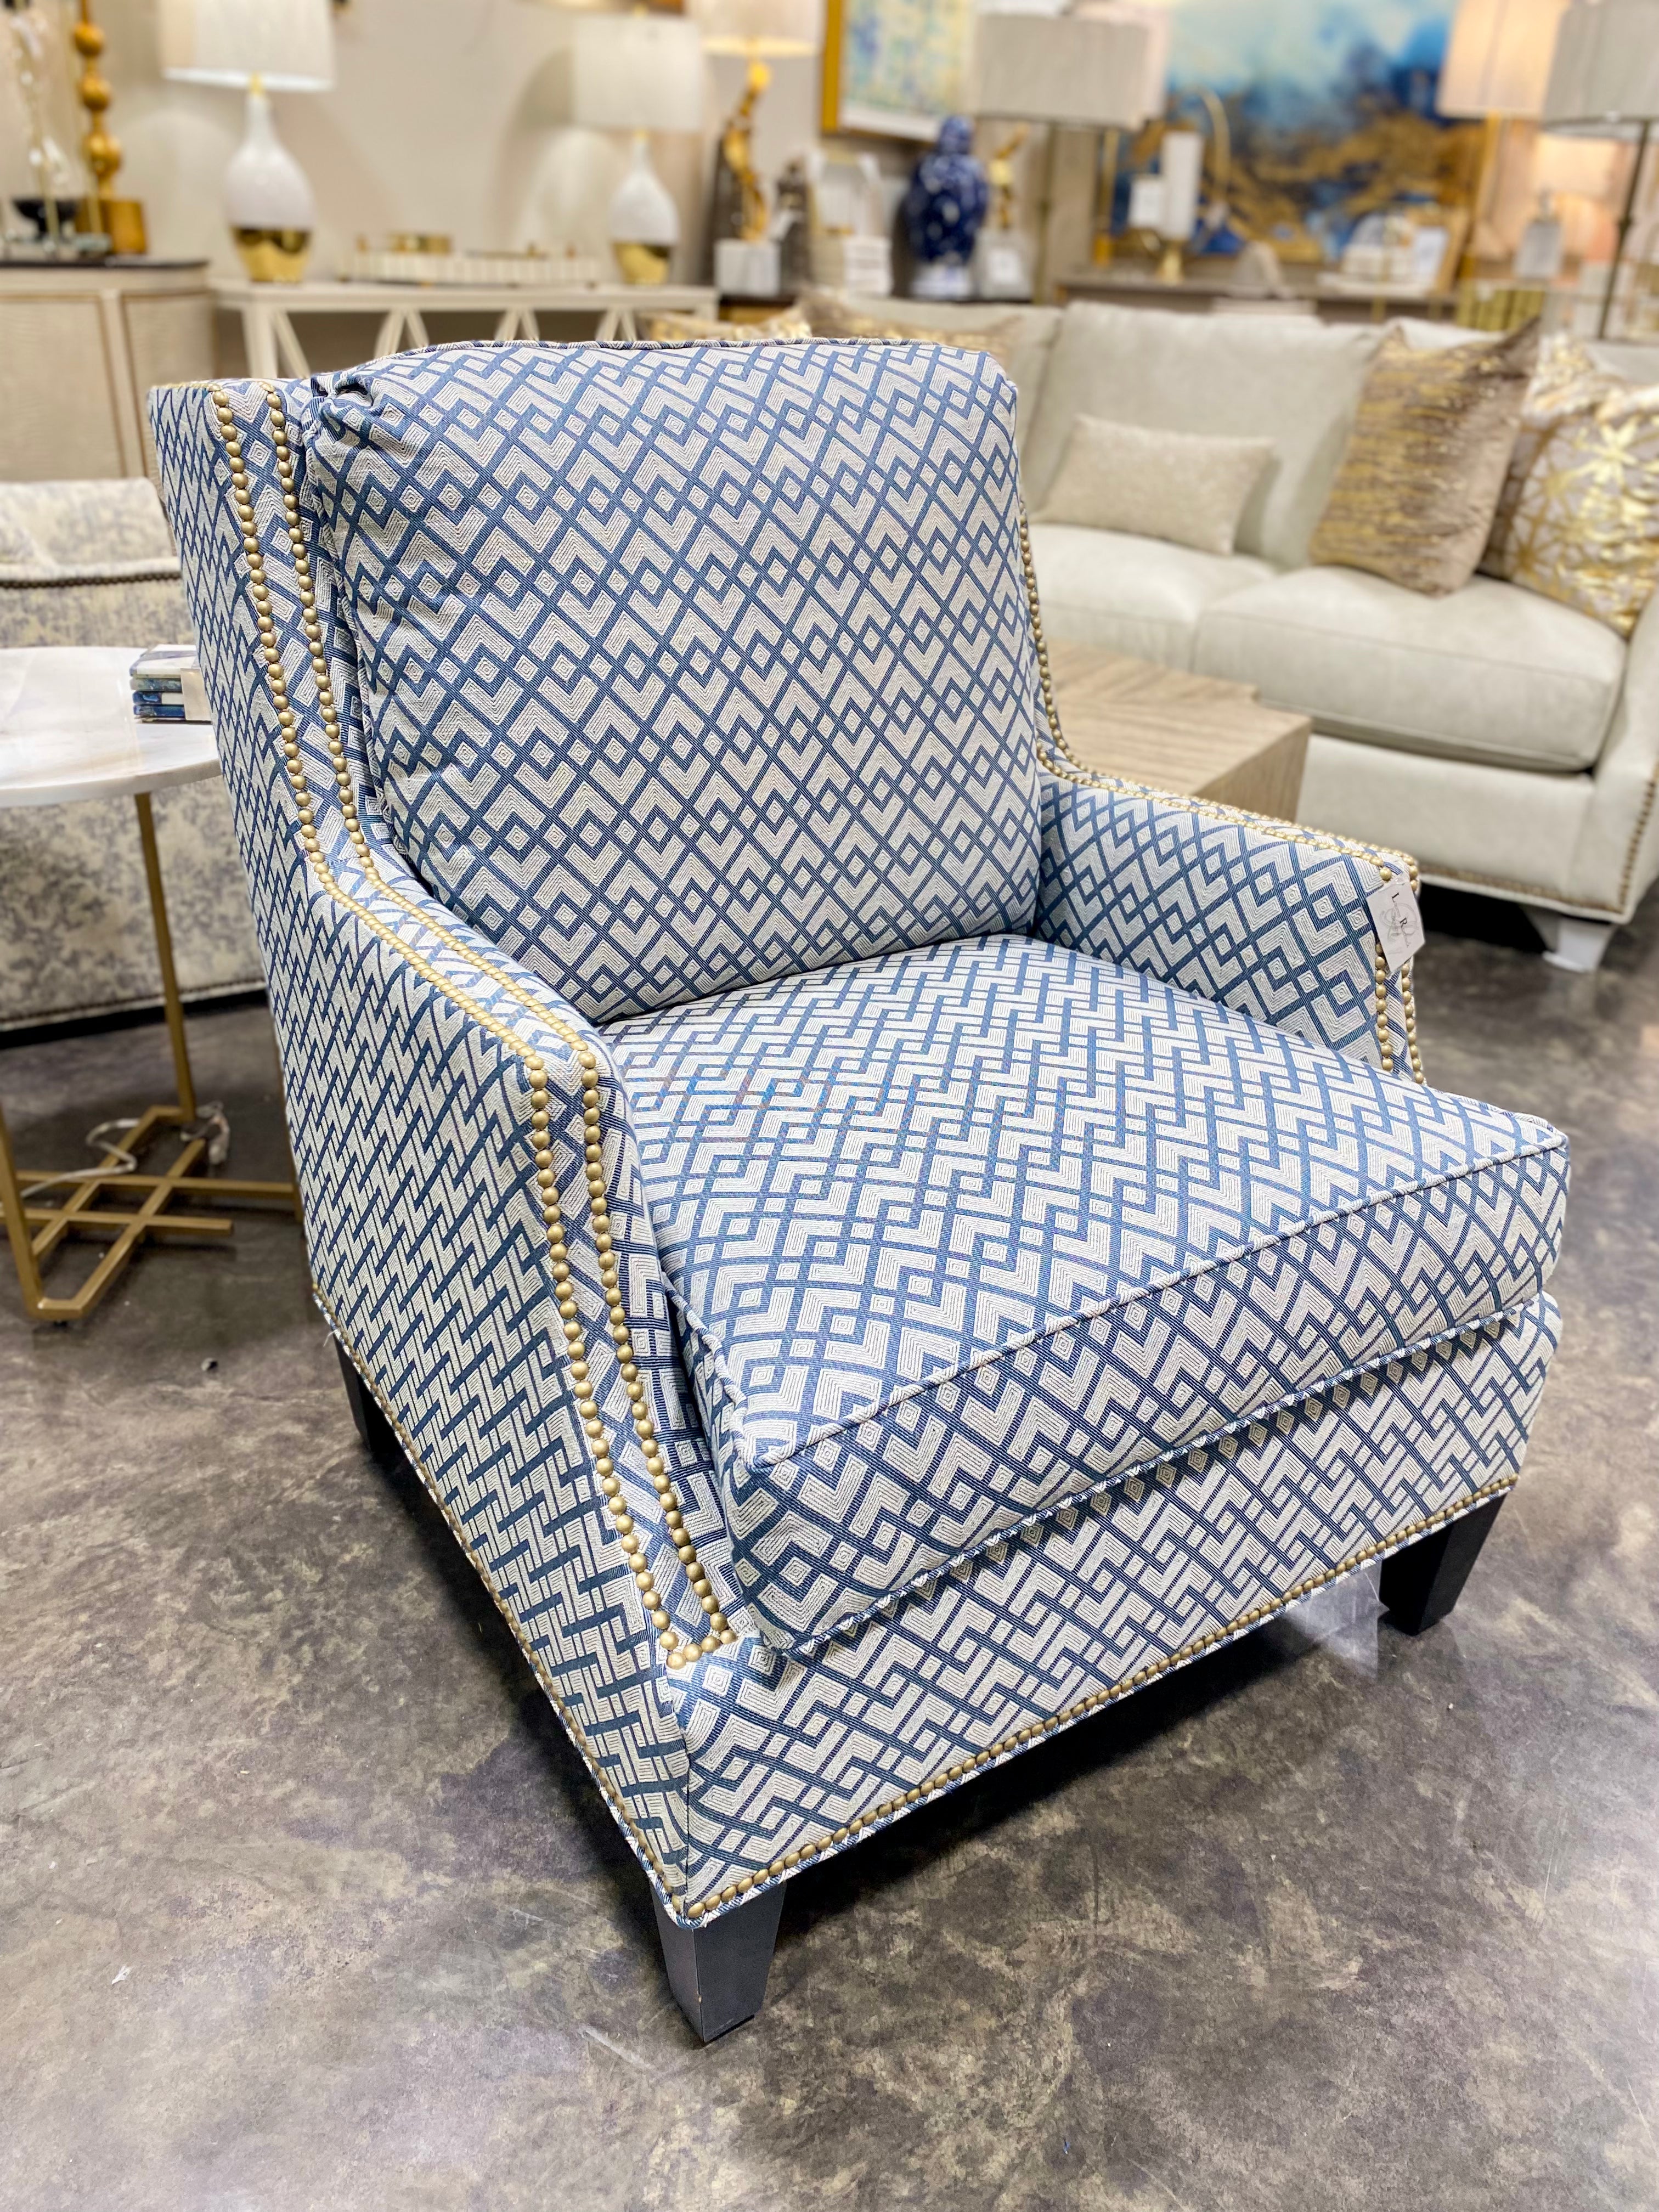 Fairfield Blue and White Chair